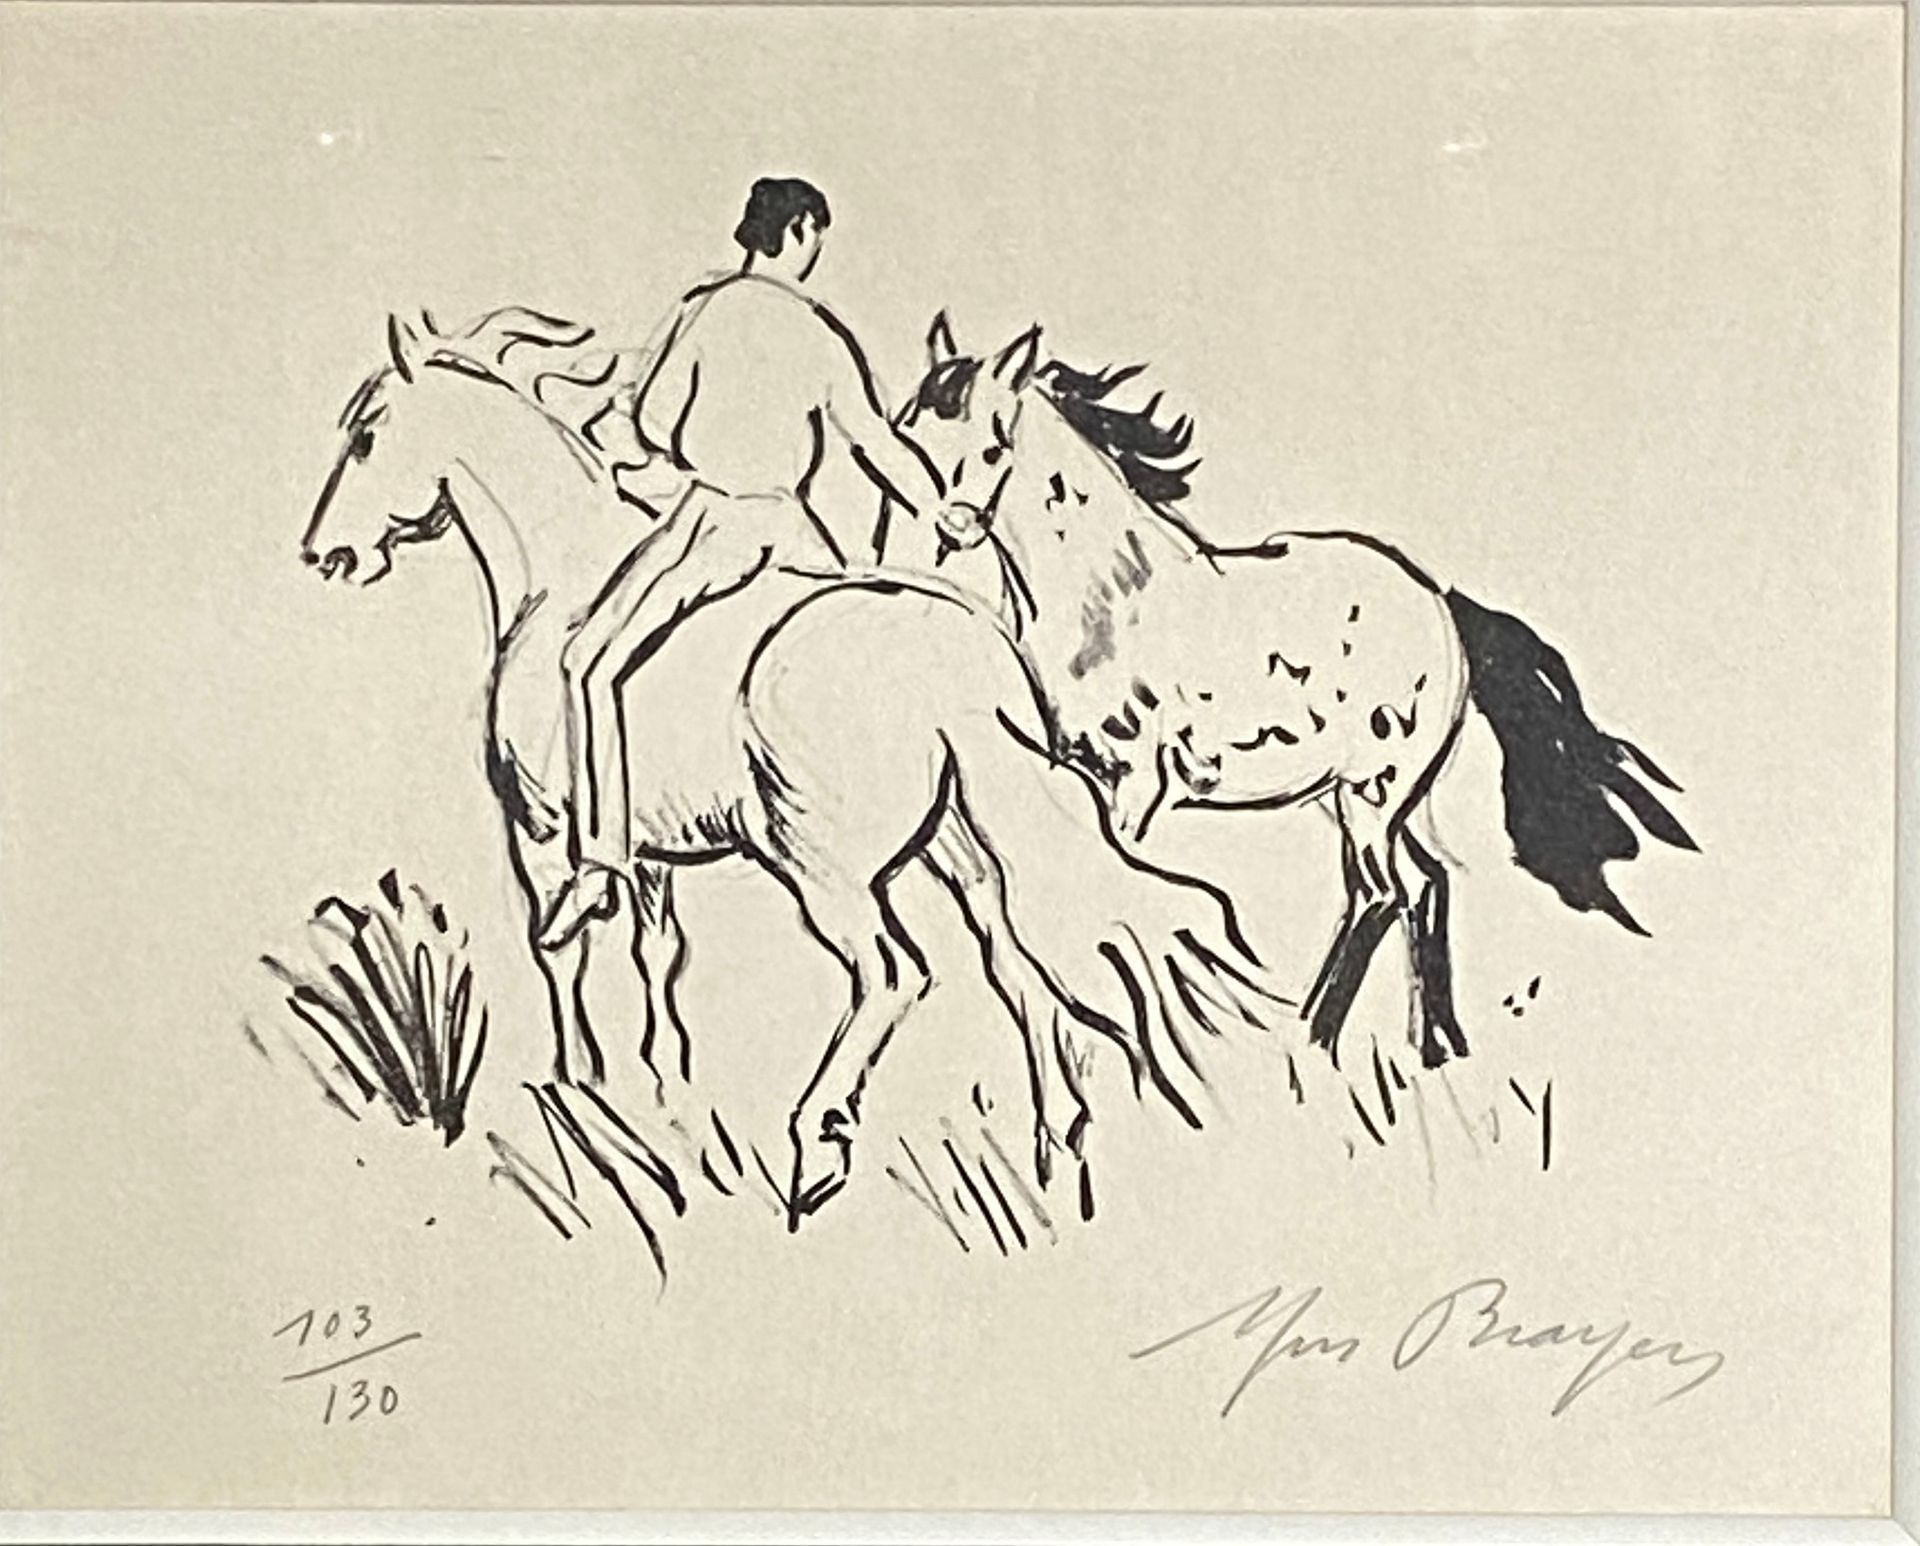 Null YVES BRAYER

骑手

黑色石版画，右面有签名eb，编号为103/130。

尺寸：19 x 23厘米